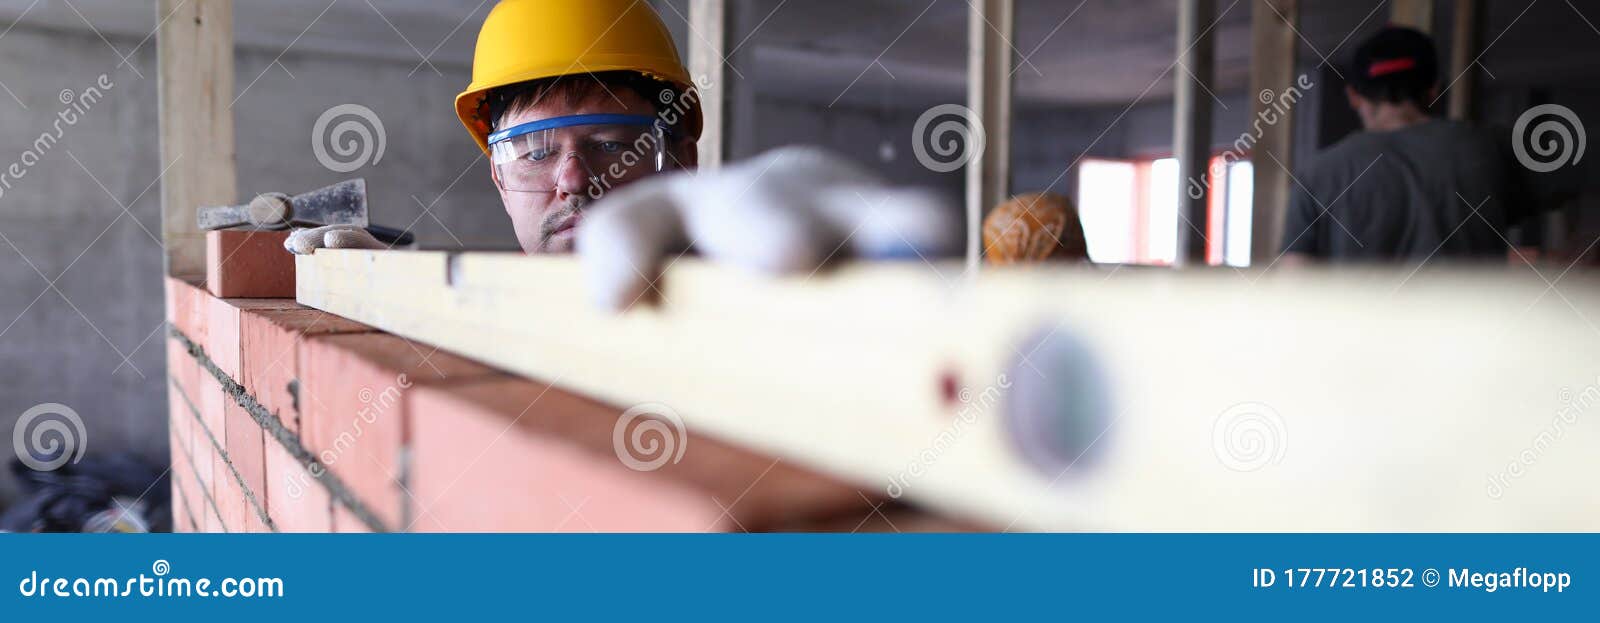 construction guy helmet measures level brickwork